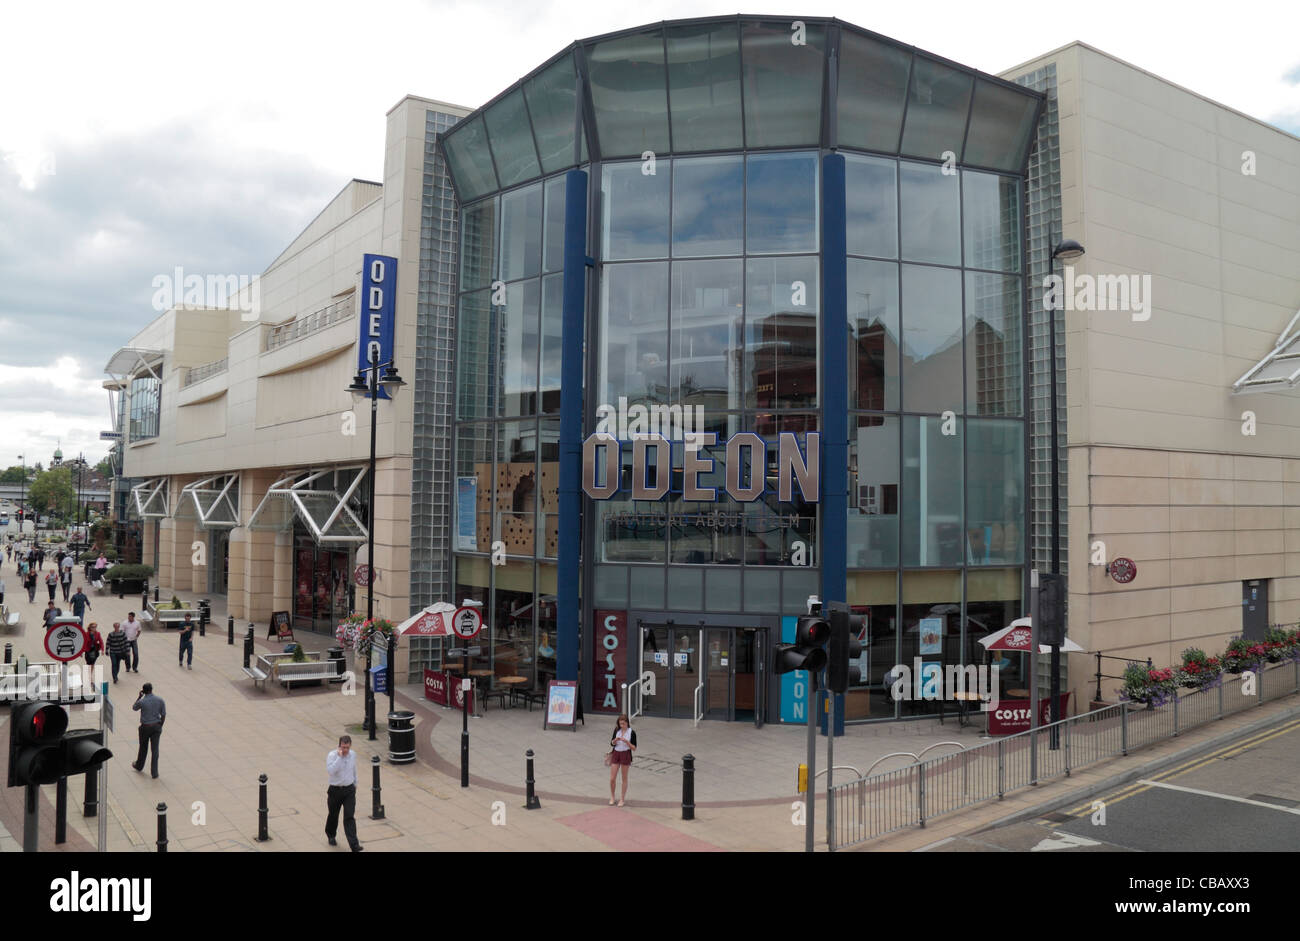 The Odeon Cinema complex in Maidenhead, Berkshire, UK. Stock Photo